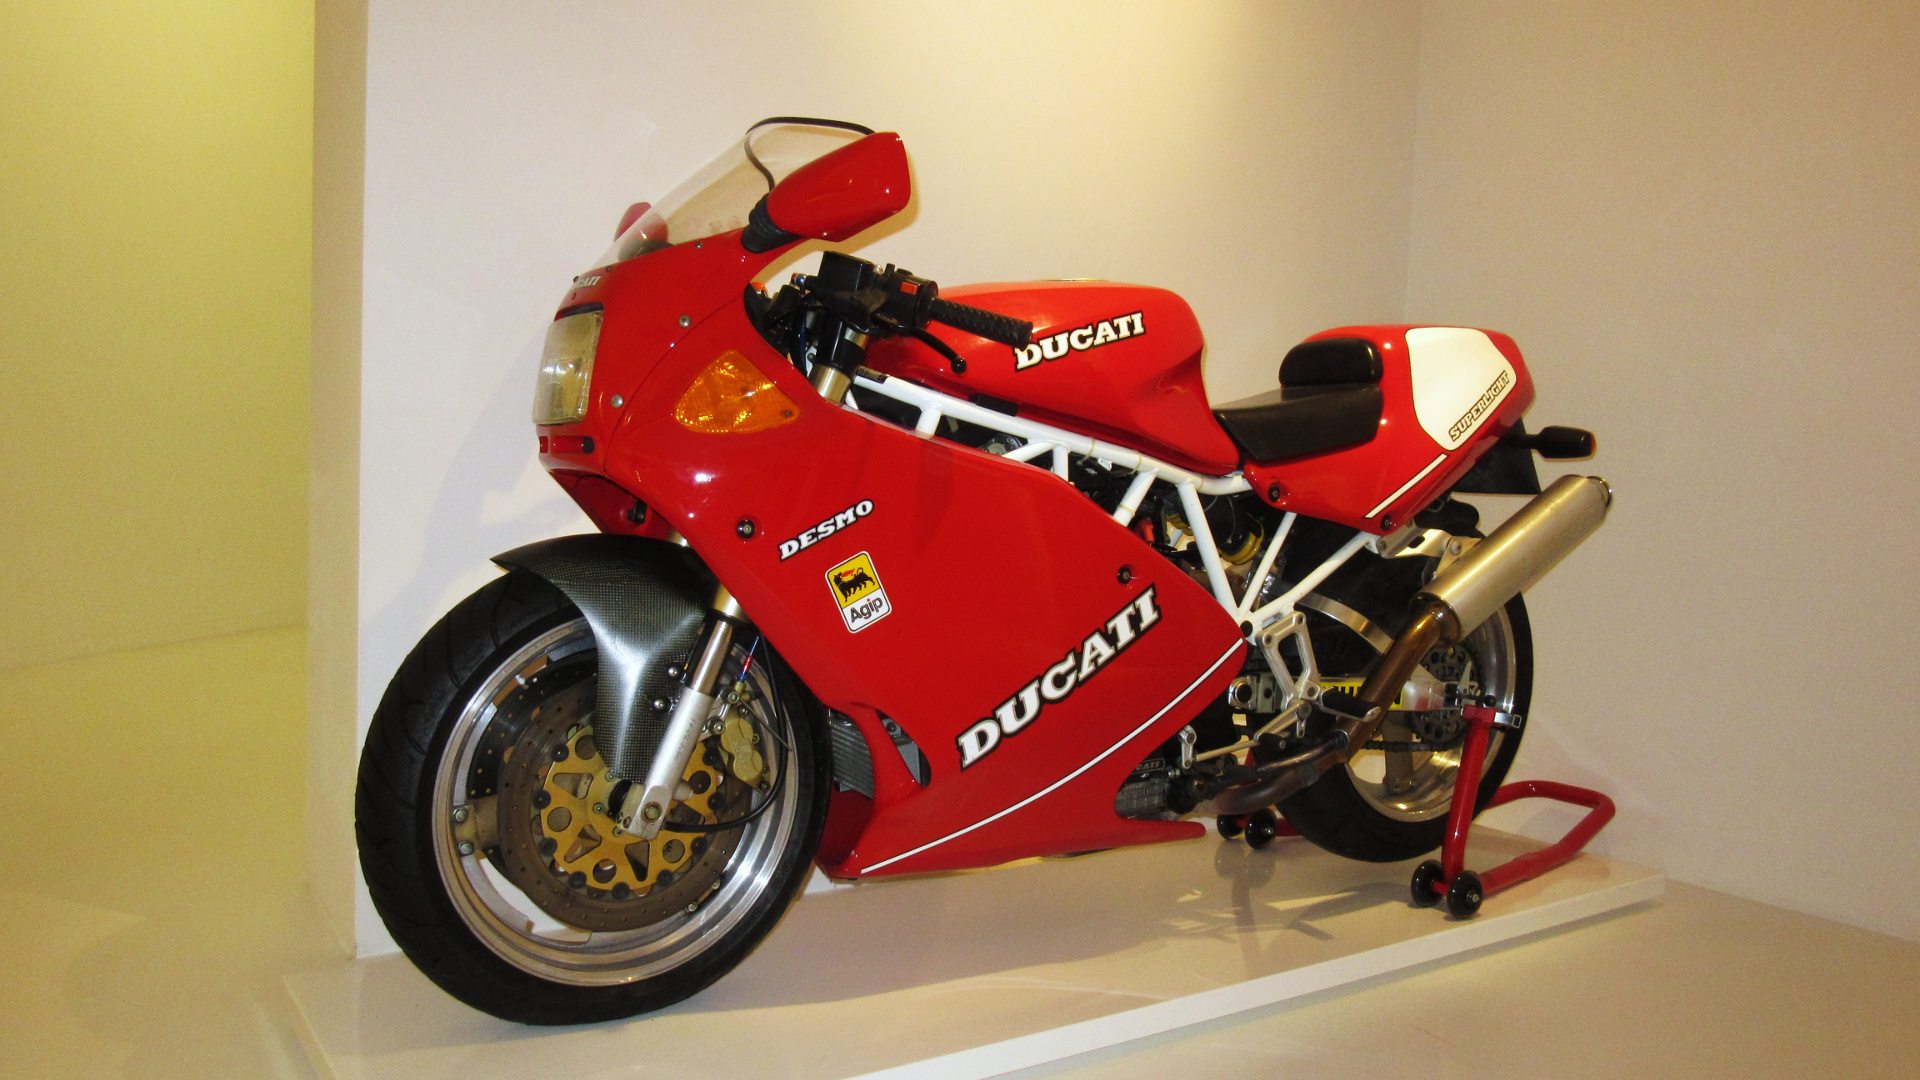 Ducati 900 Superlight (1992)